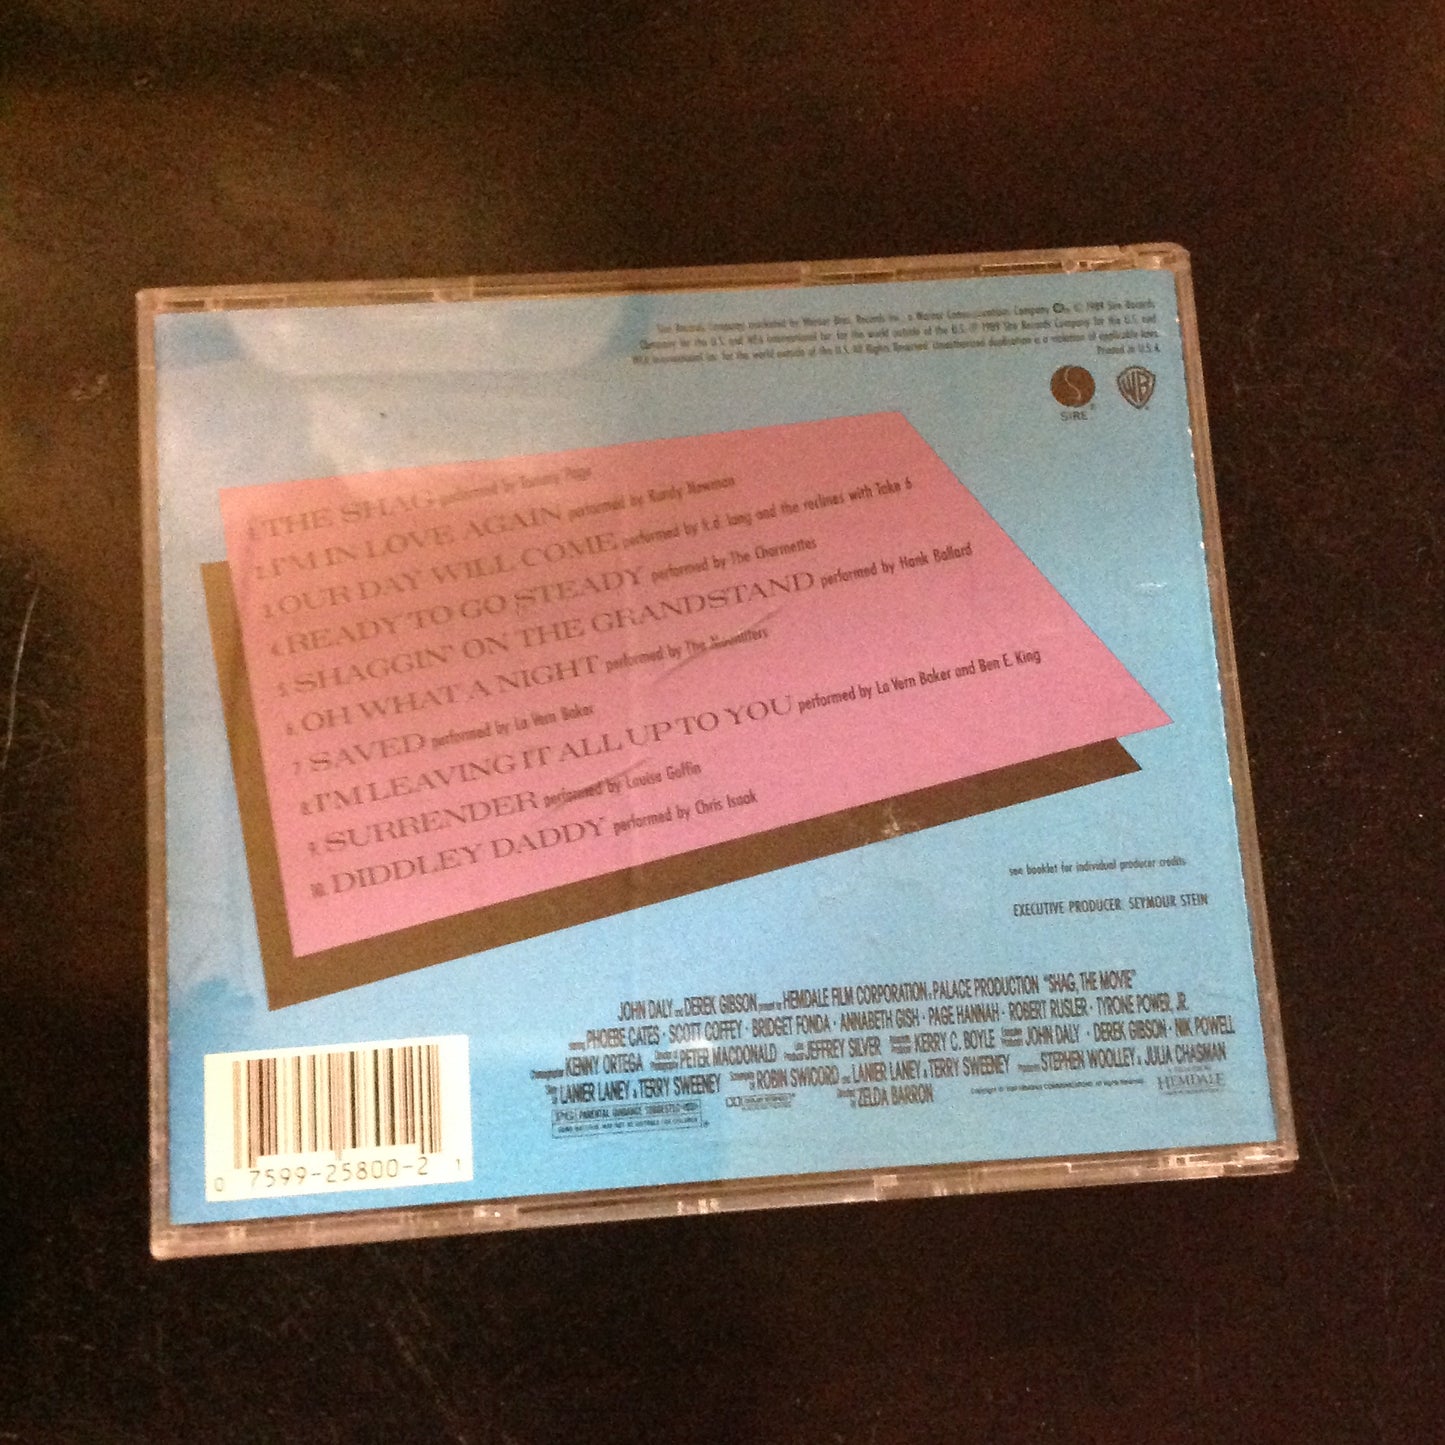 CD Original Motion Picture Soundtrack Movie SHAG Various Artists Comp Compilation RARE 9 25800-2